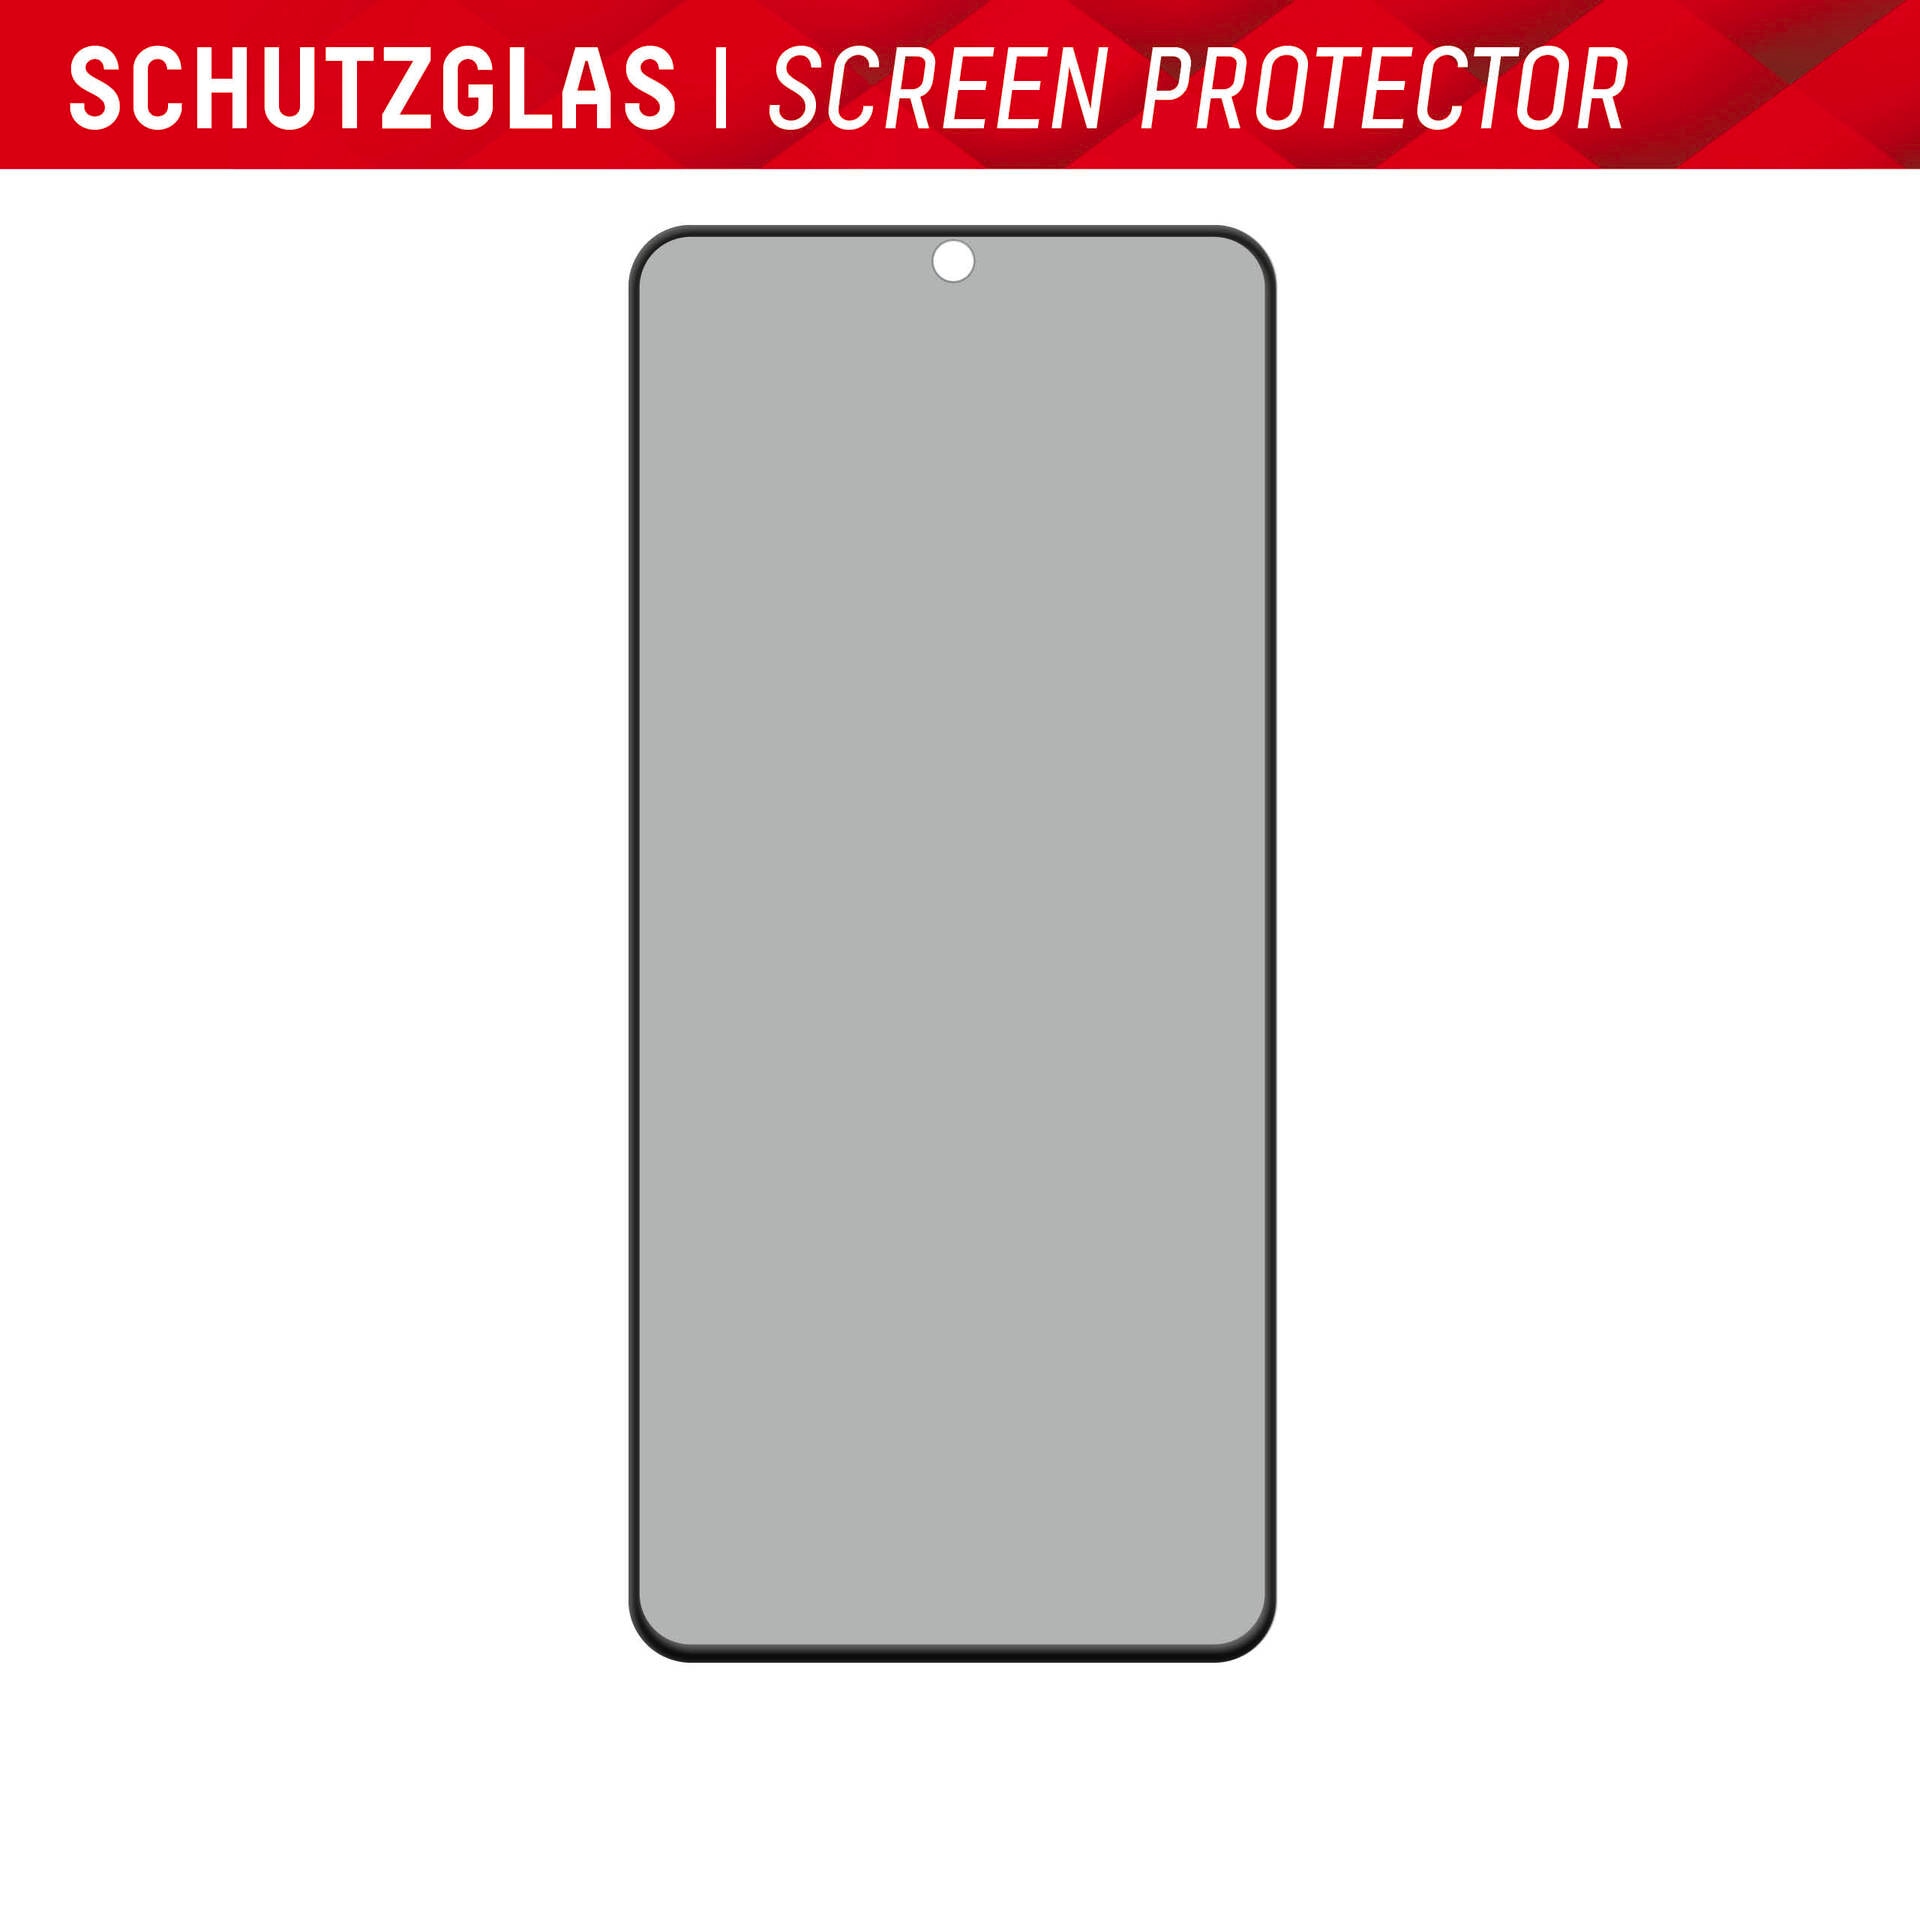 Displex Displayschutzglas »Privacy Glass FC - Samsung Galaxy S22/S23«